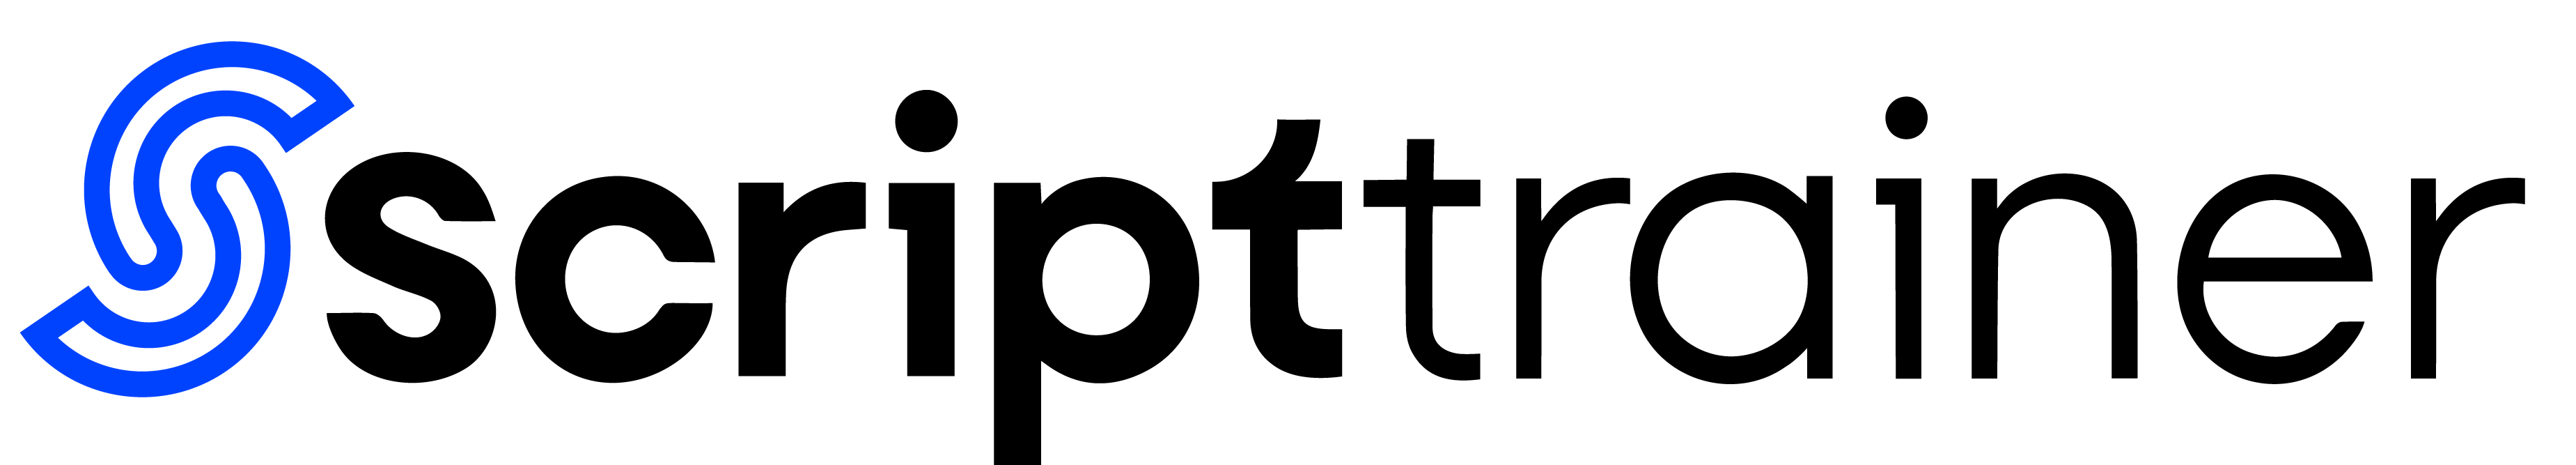 Scripttrainer Logo